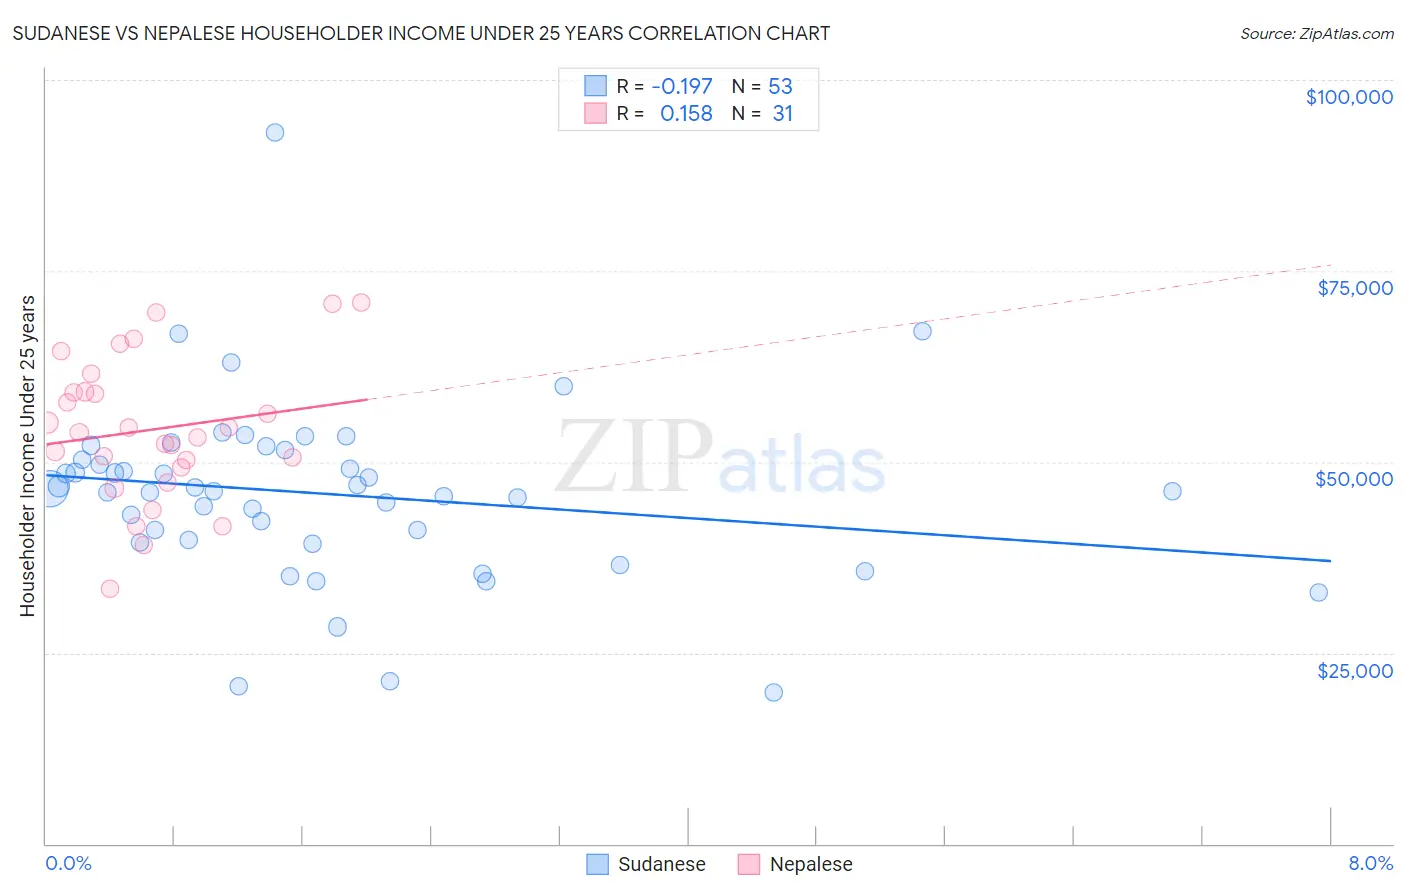 Sudanese vs Nepalese Householder Income Under 25 years